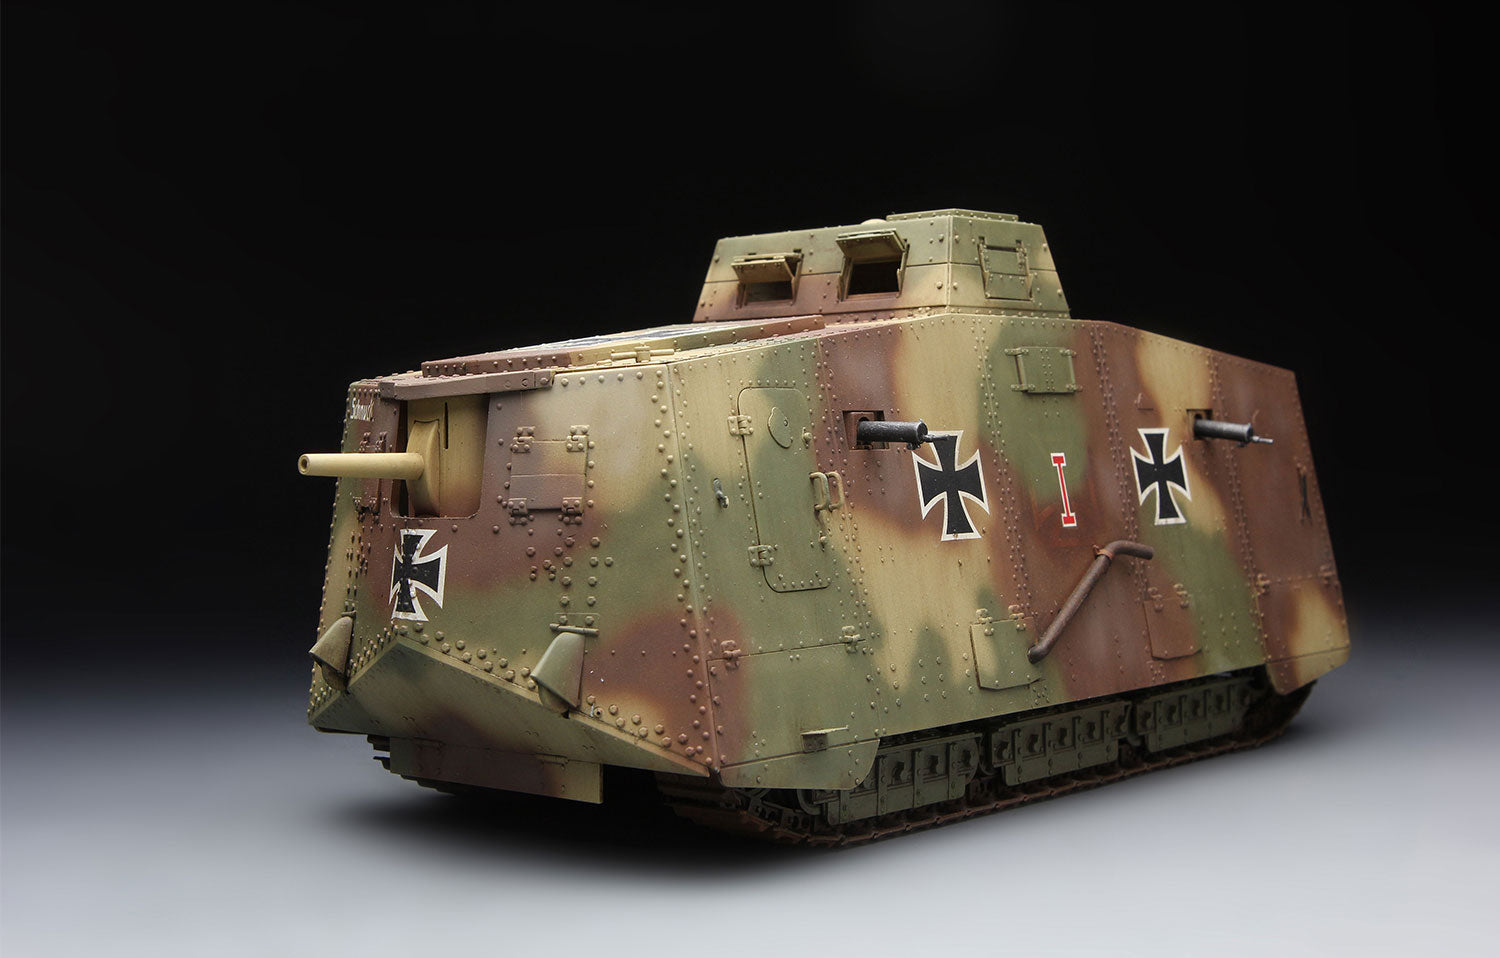 TS-017 - Meng 1/35 German A7V Tank (Krupp)